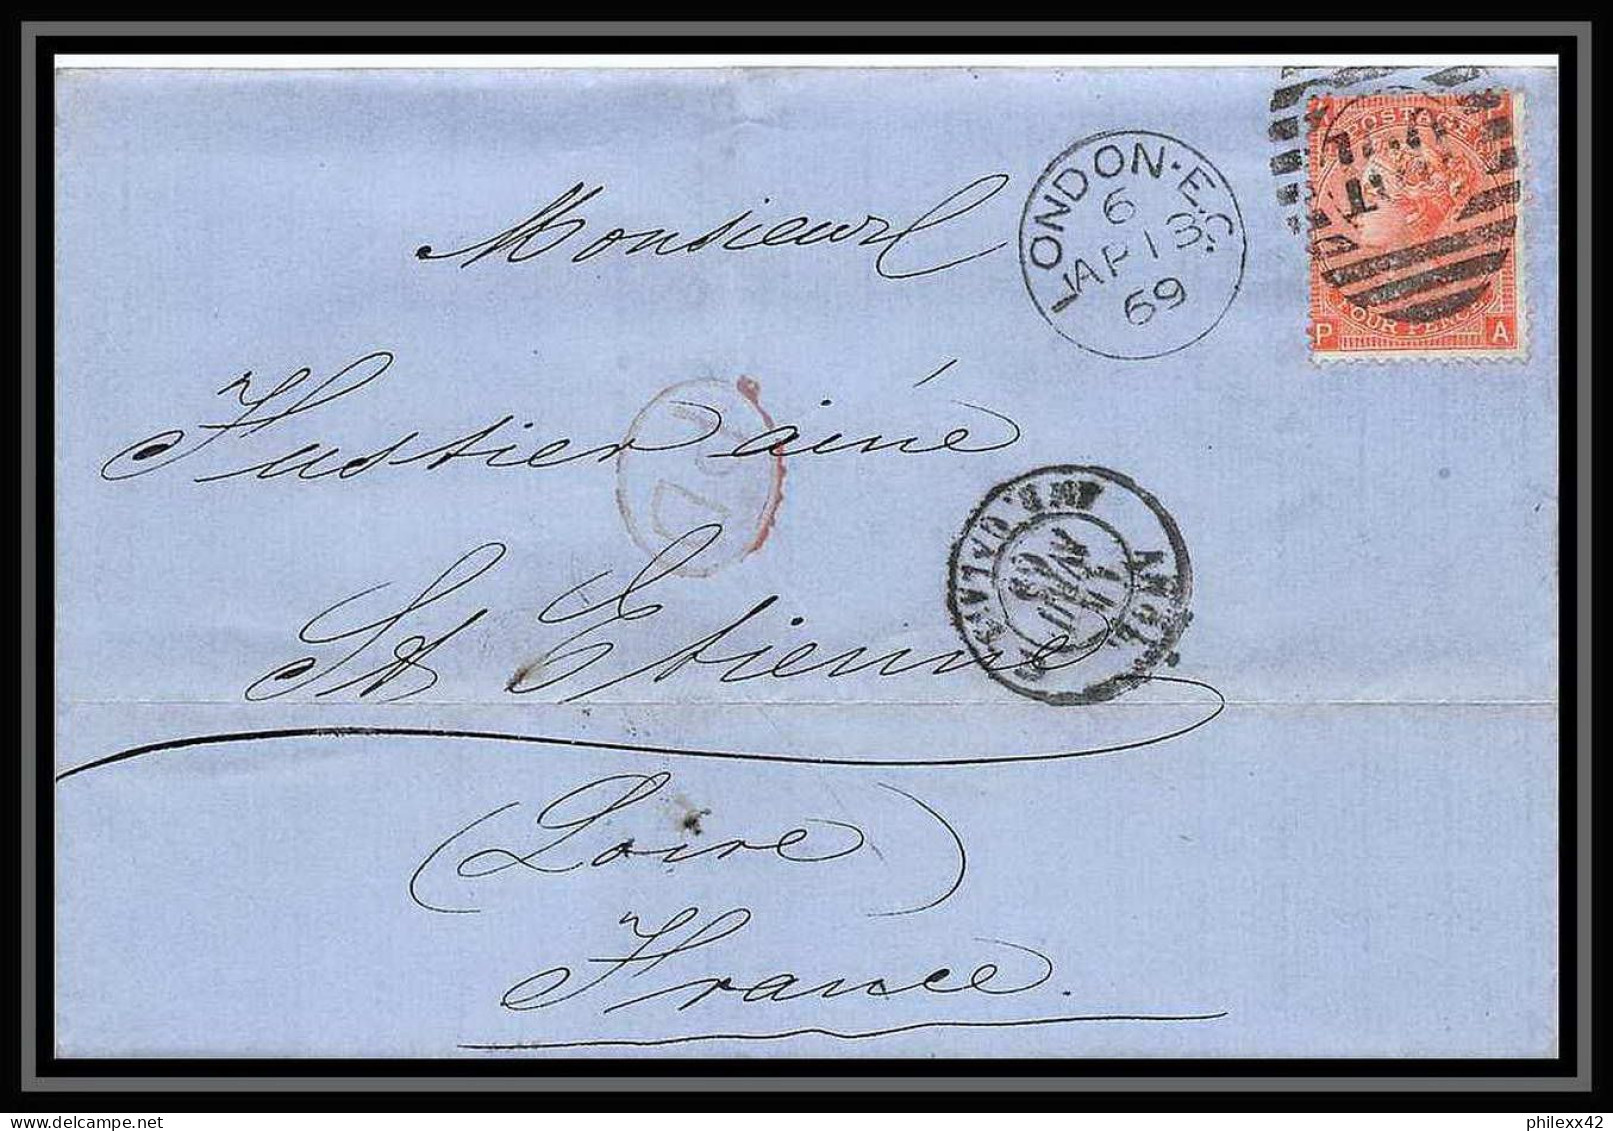 35835 N°32 Victoria 4p Red London St Etienne France 1869 Cachet 100 Lettre Cover Grande Bretagne England - Briefe U. Dokumente